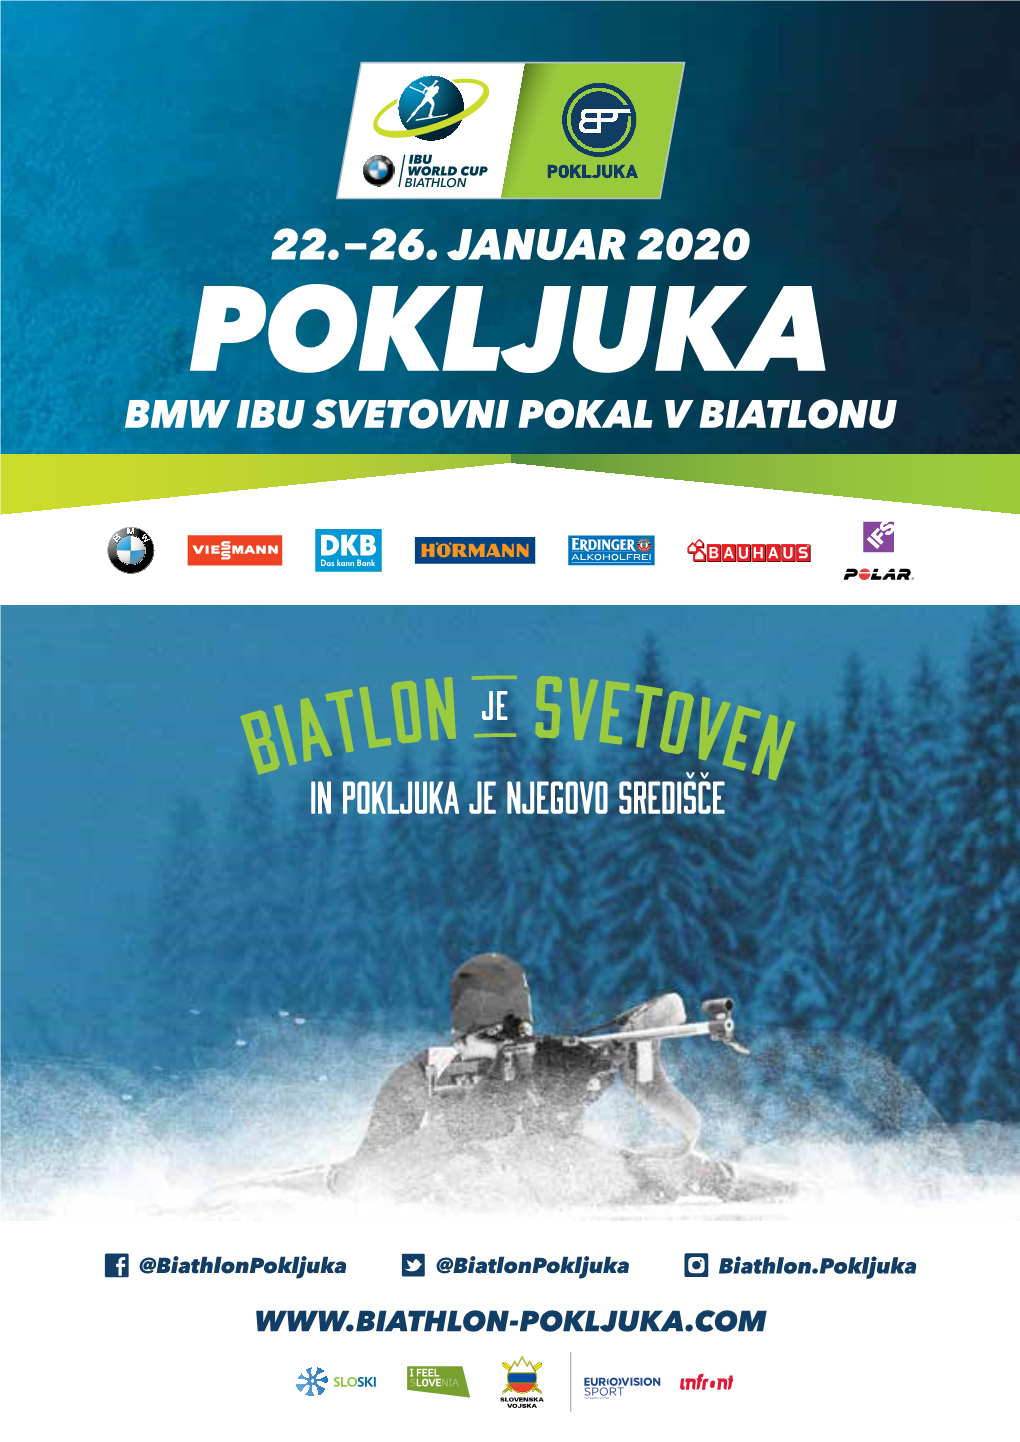 26. Januar 2020 Pokljuka Bmw Ibu Svetovni Pokal V Biatlonu